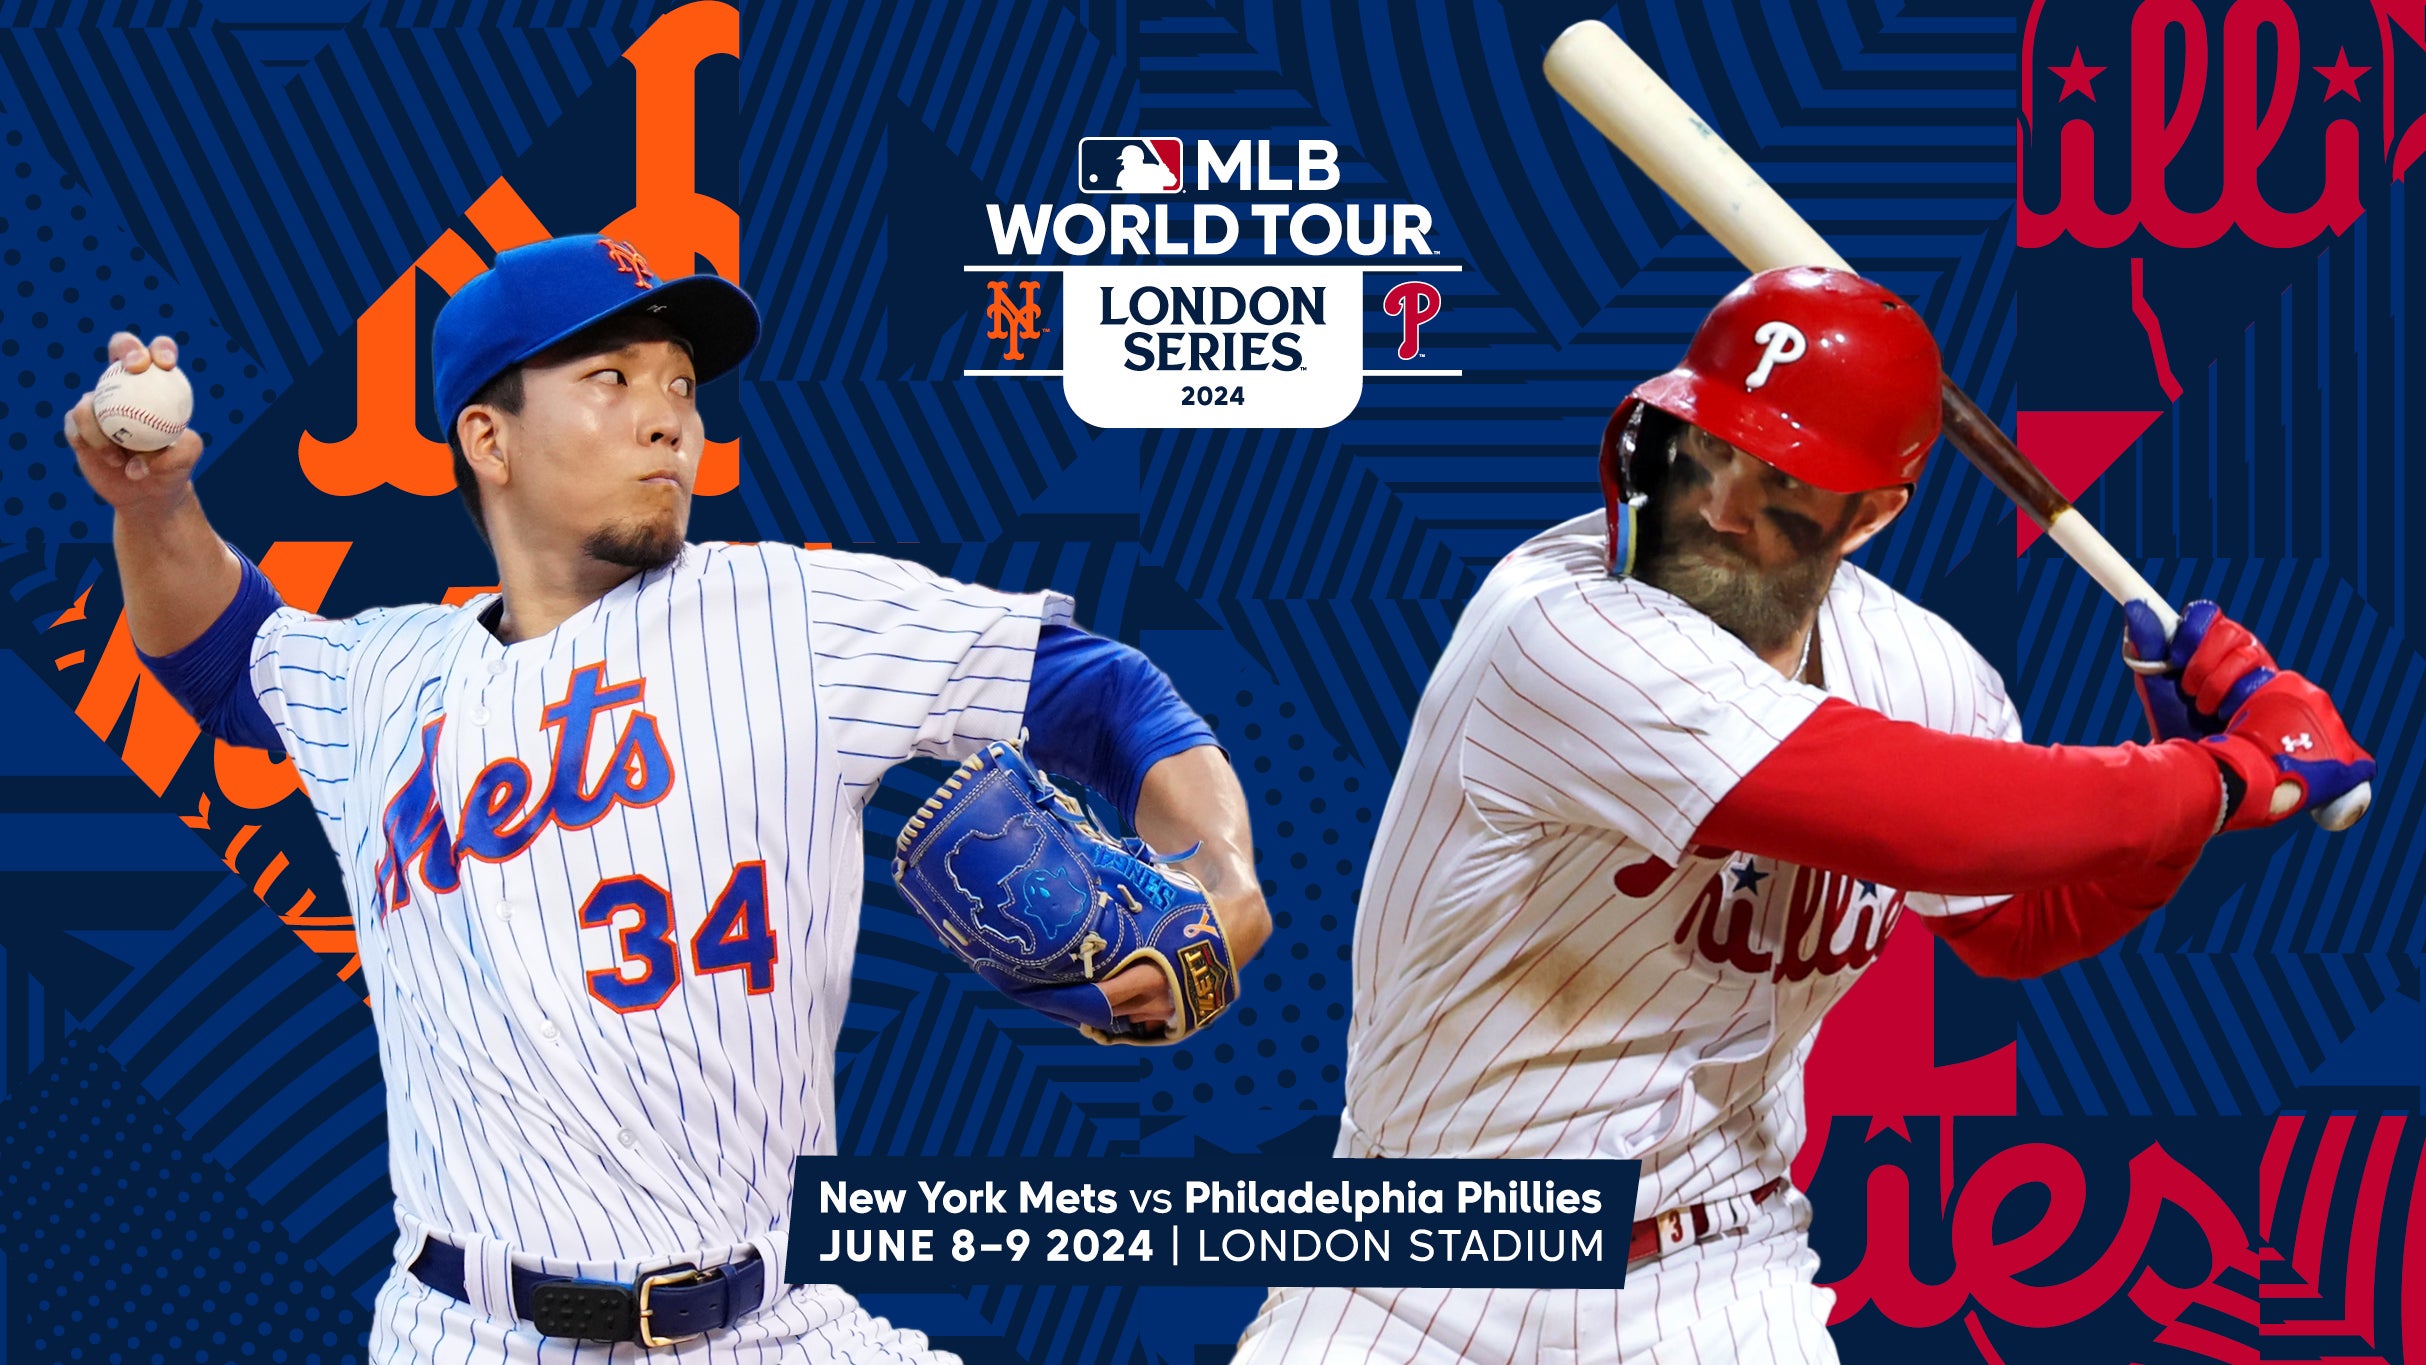 MLB World Tour: London Series - New York Mets v Philadelphia Phillies in London promo photo for Venue Presale Accessible presale offer code